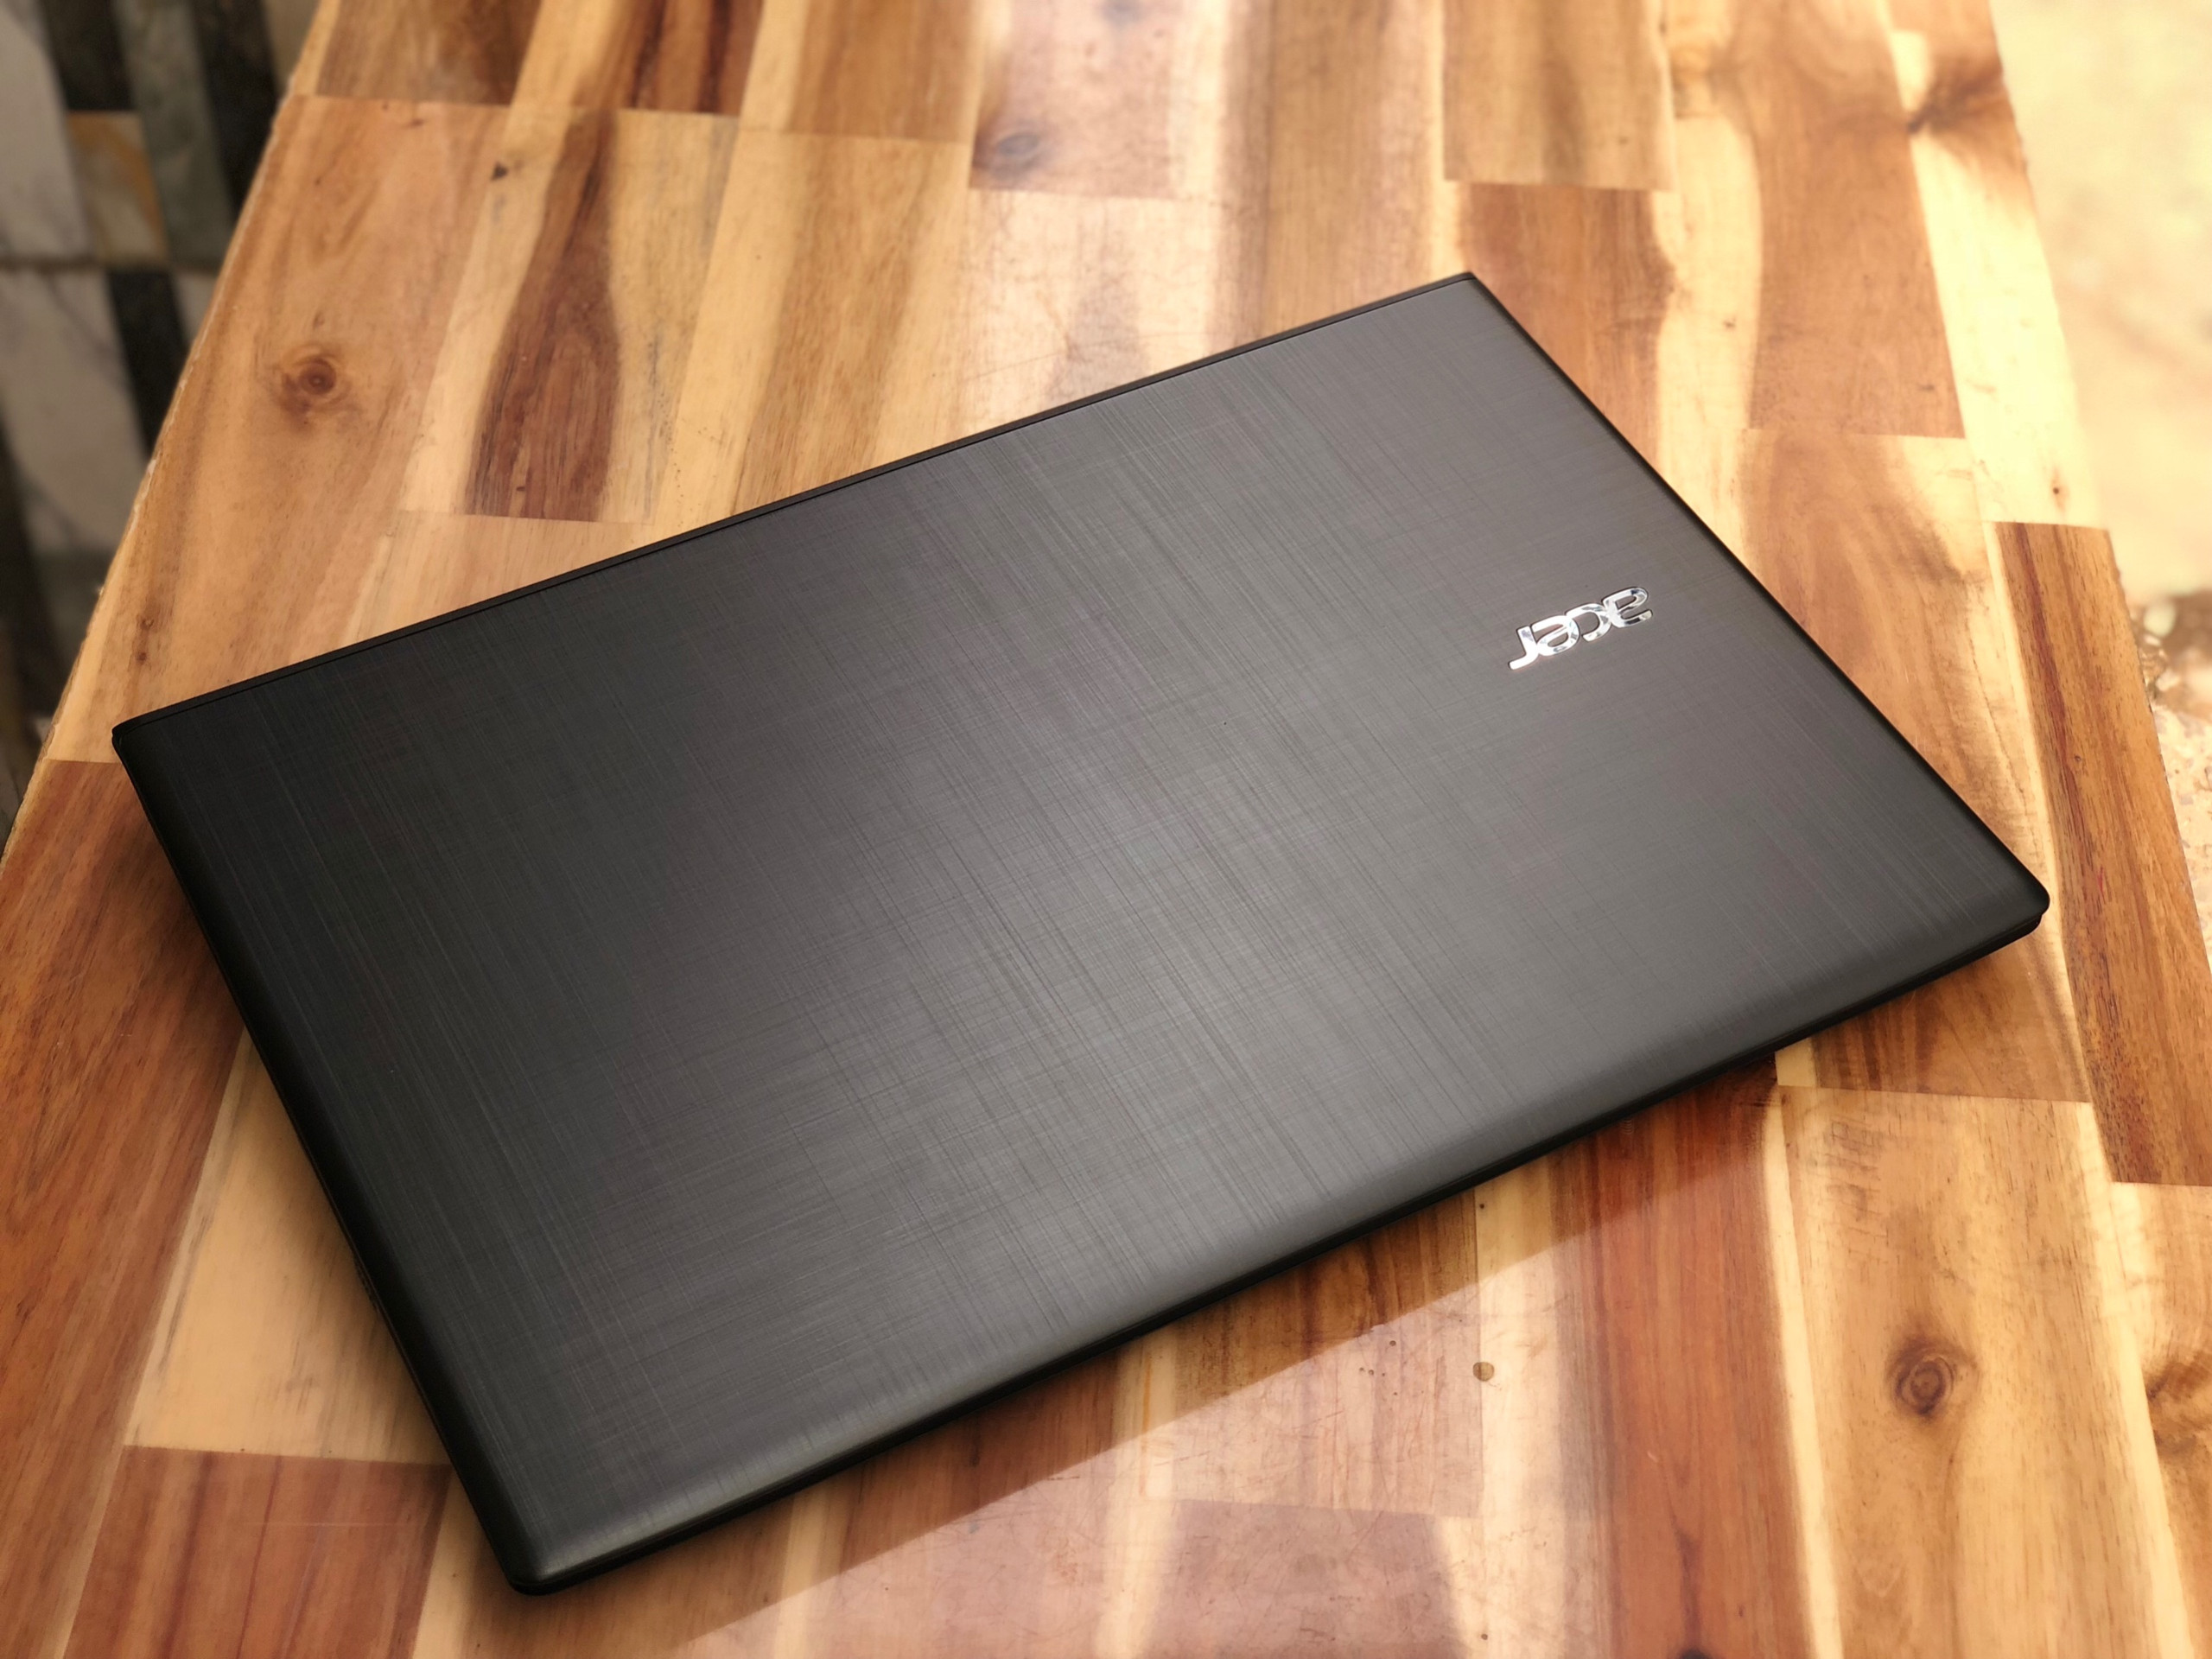 Laptop Acer E5-575G-39QW, i3 7100U 4G 500G Vga GT940MX Full HD Like new zin 100% Giá rẻ3